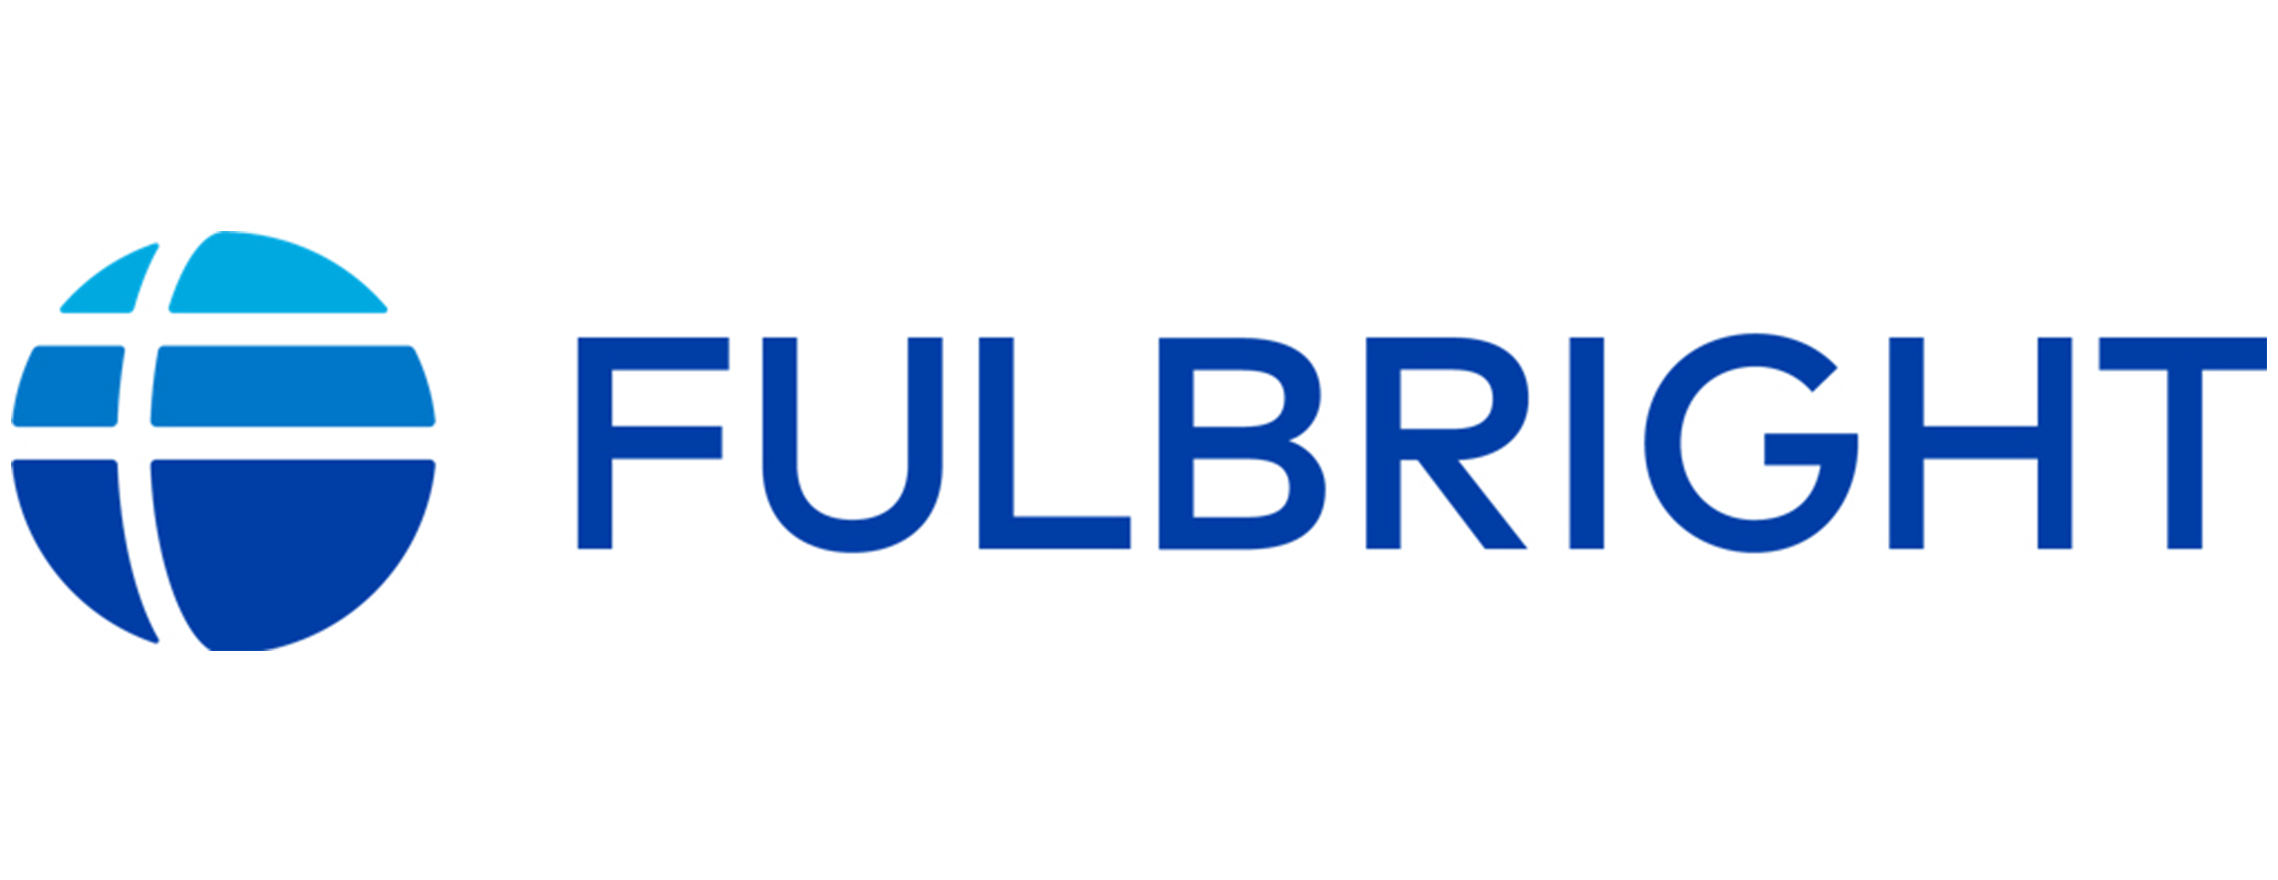 Fulbright logo new